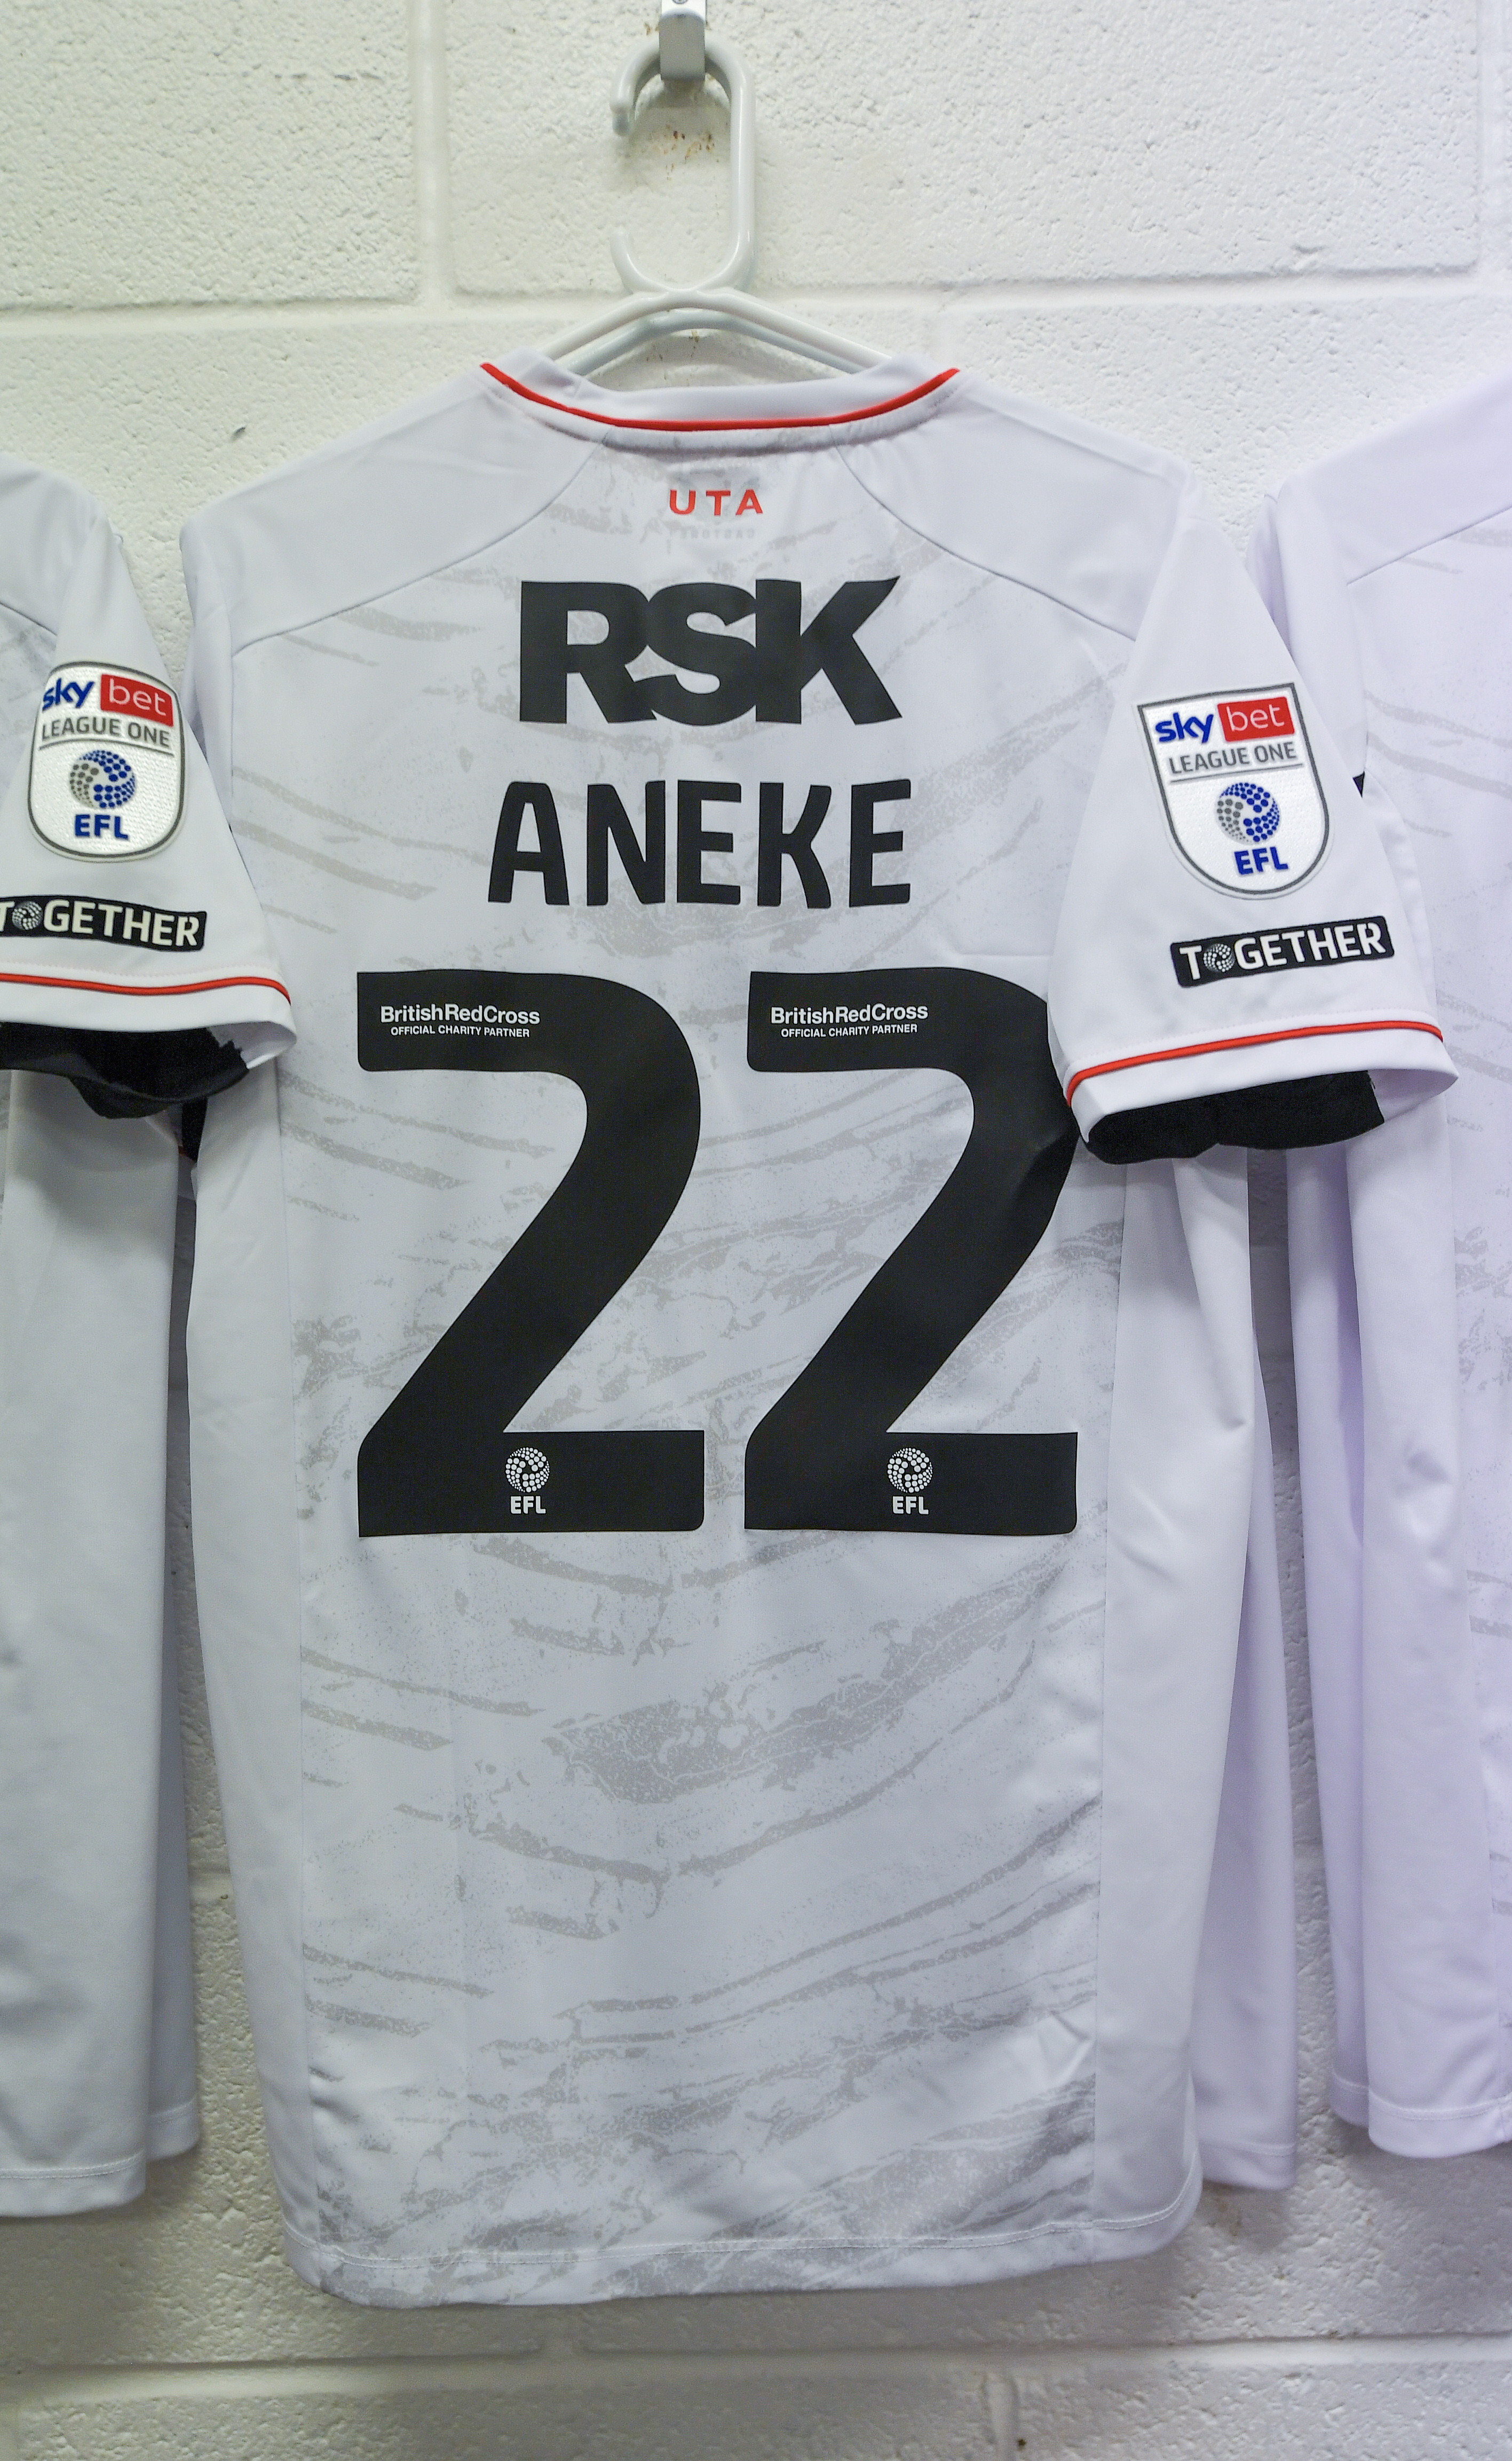 Chuks Aneke's number 22 shirt in the Charlton dressing room